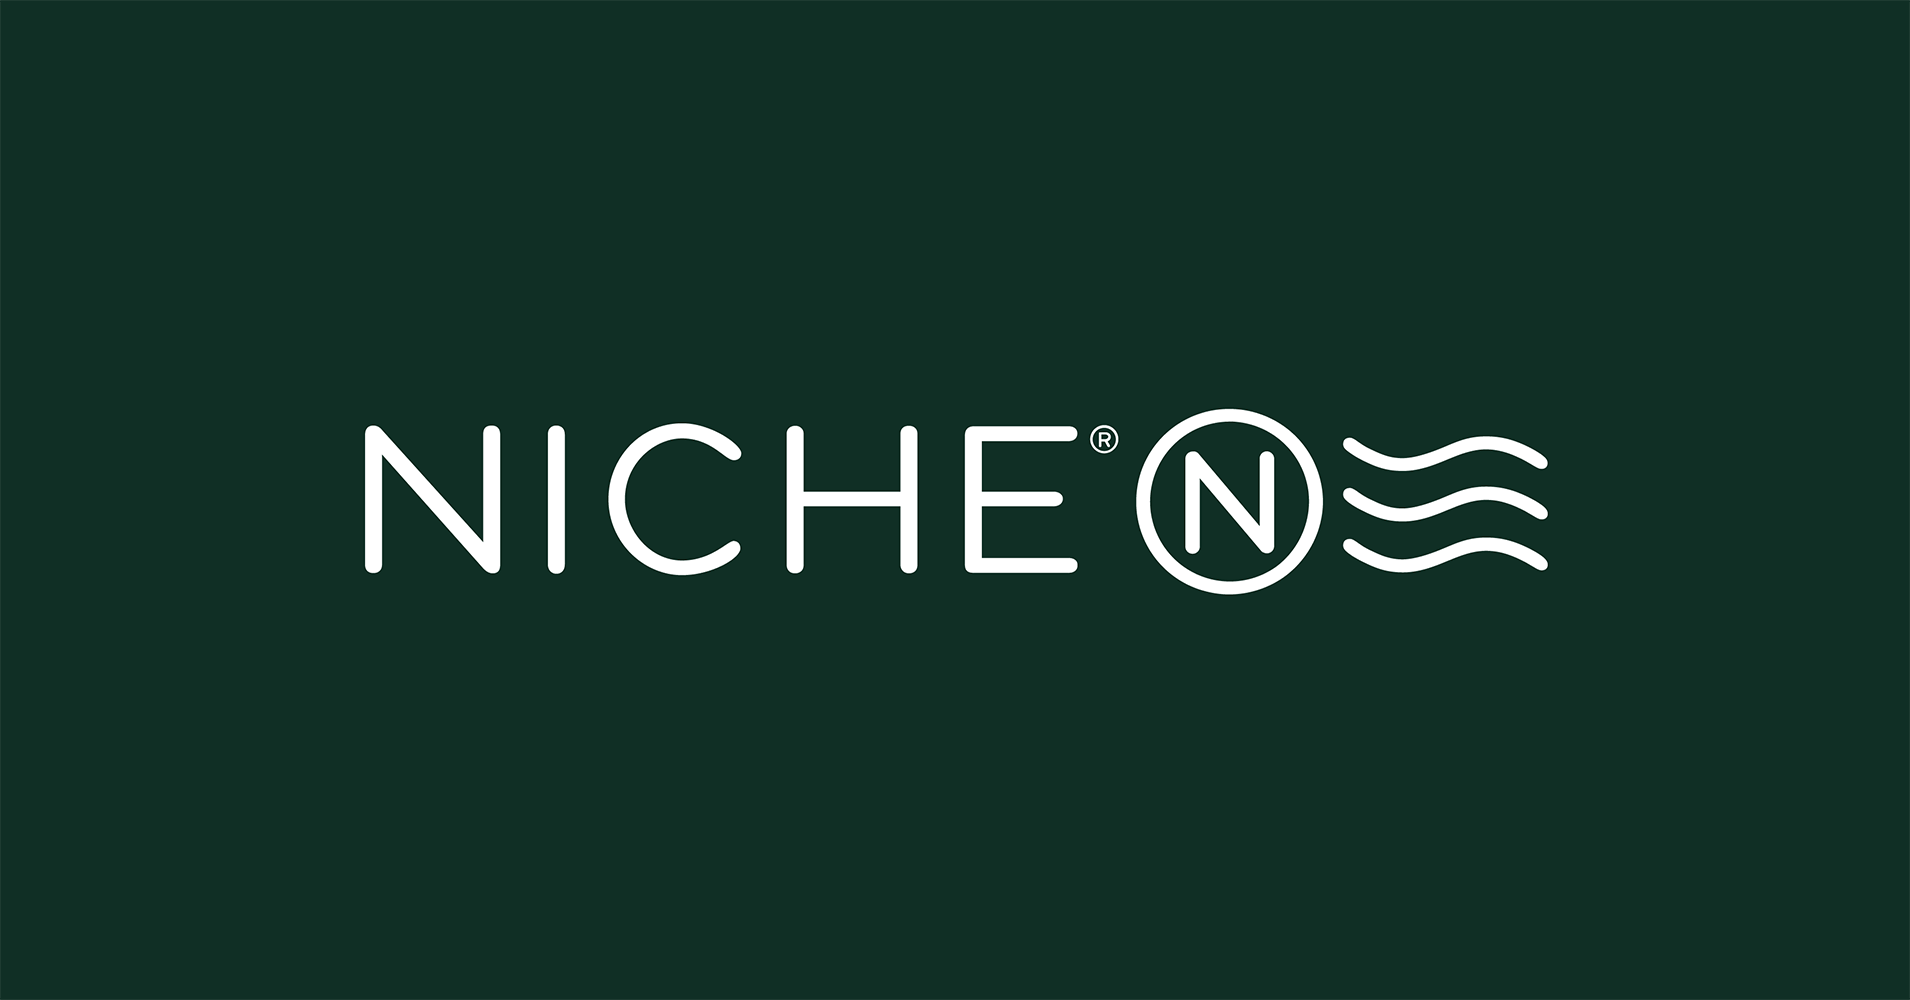 www.niche.com